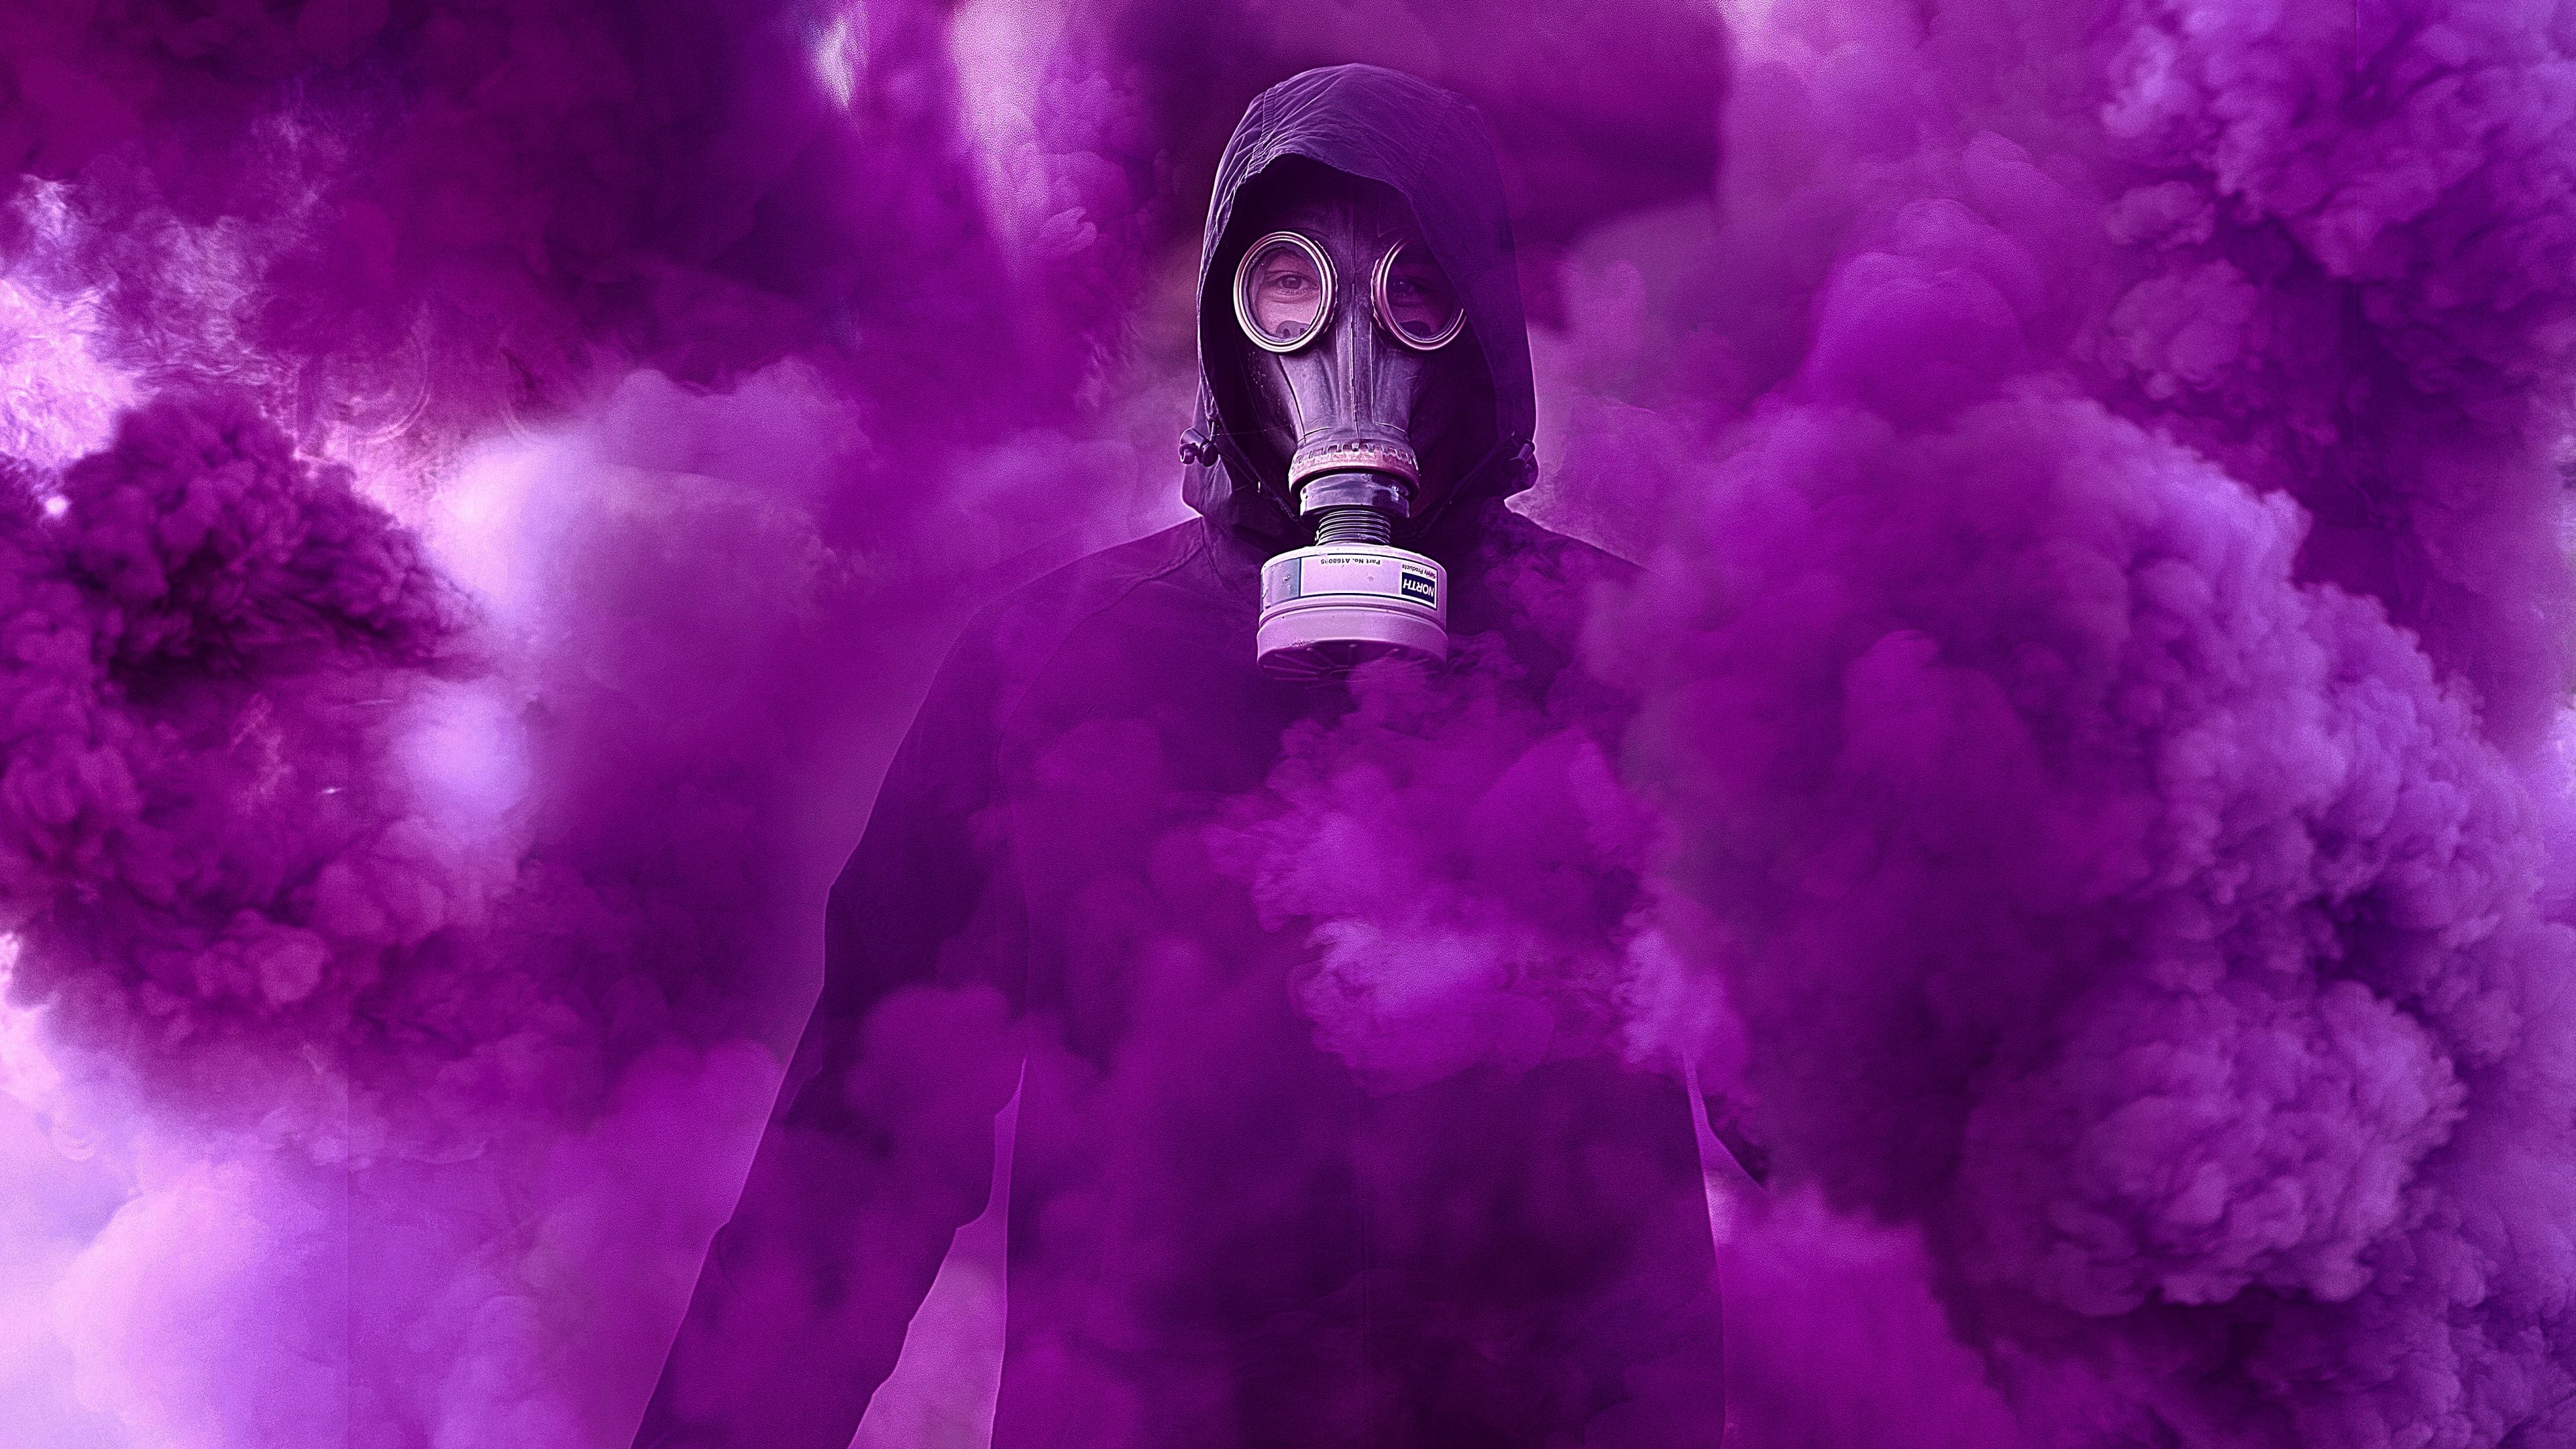 Gas mask 4K Wallpaper, Hoodie, Person in Black, Purple Smoke, Protective Gear, 5K, People